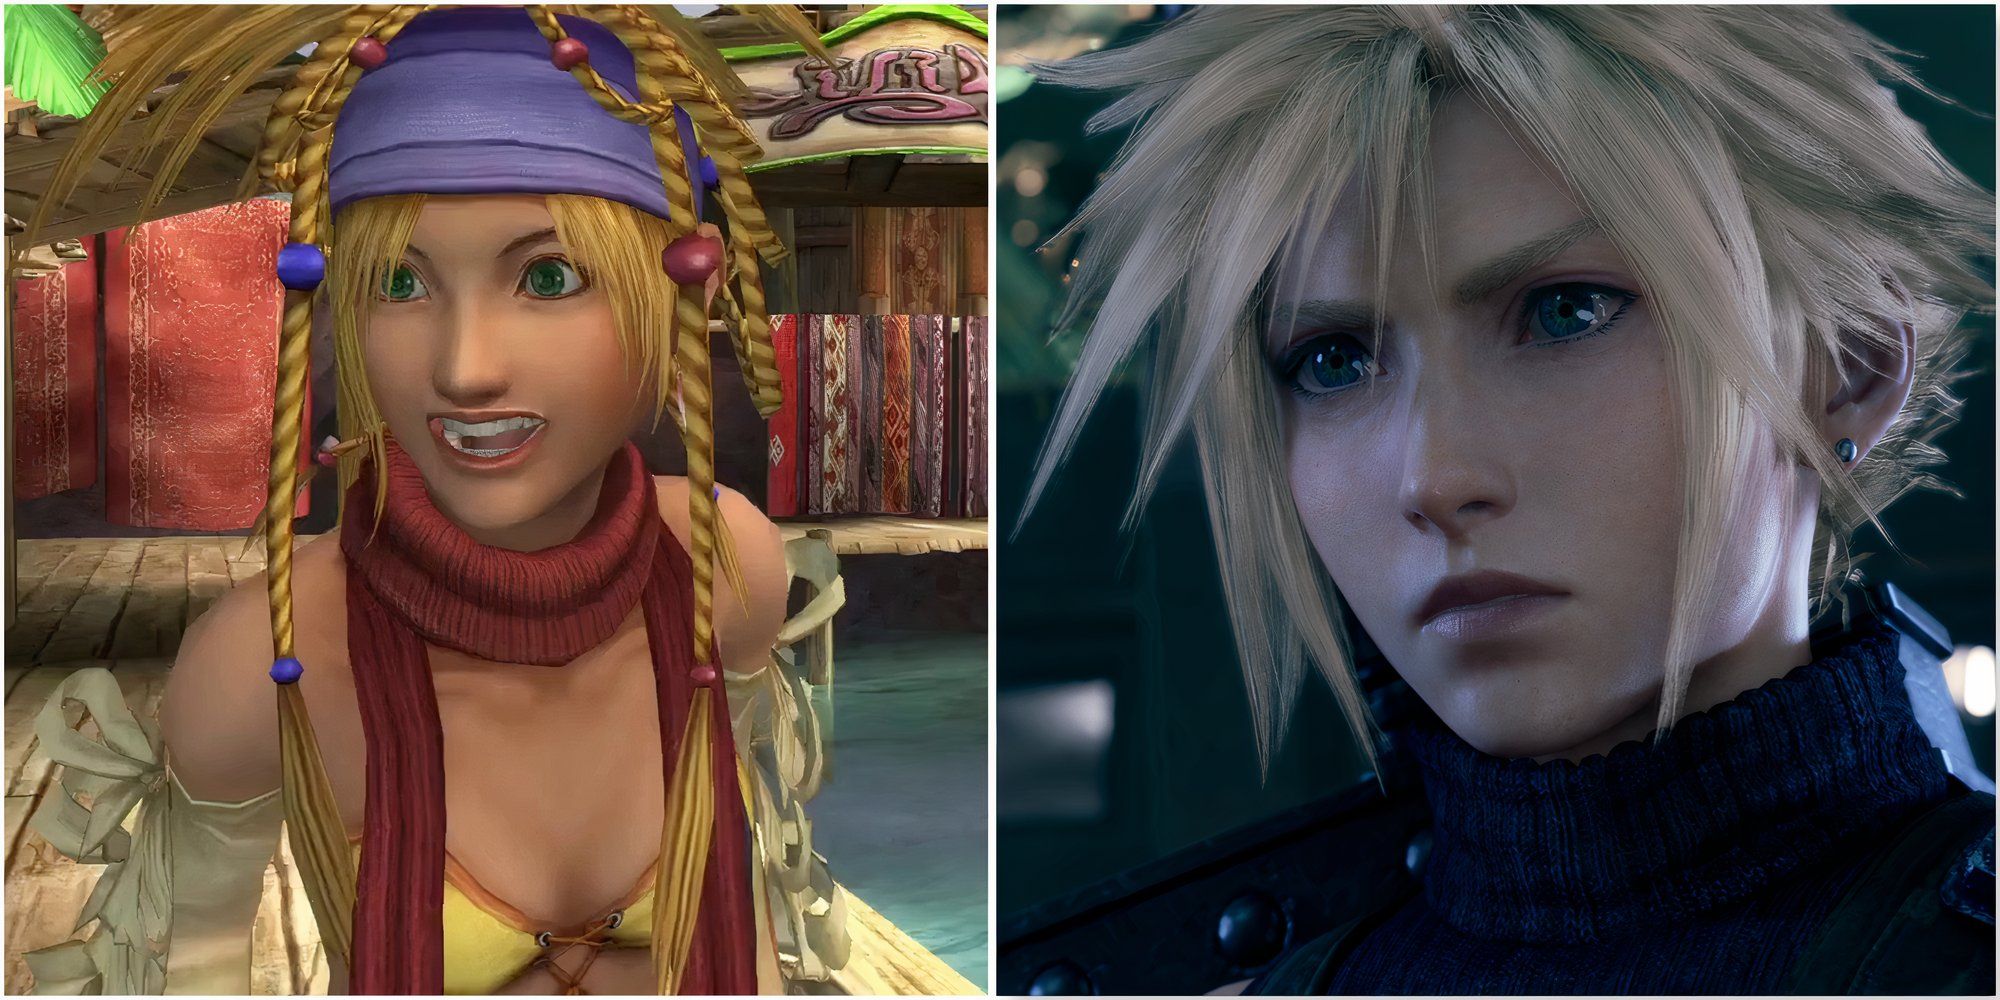 Rikku in Final Fantasy 10-2 and Cloud in Final Fantasy 7 Remake